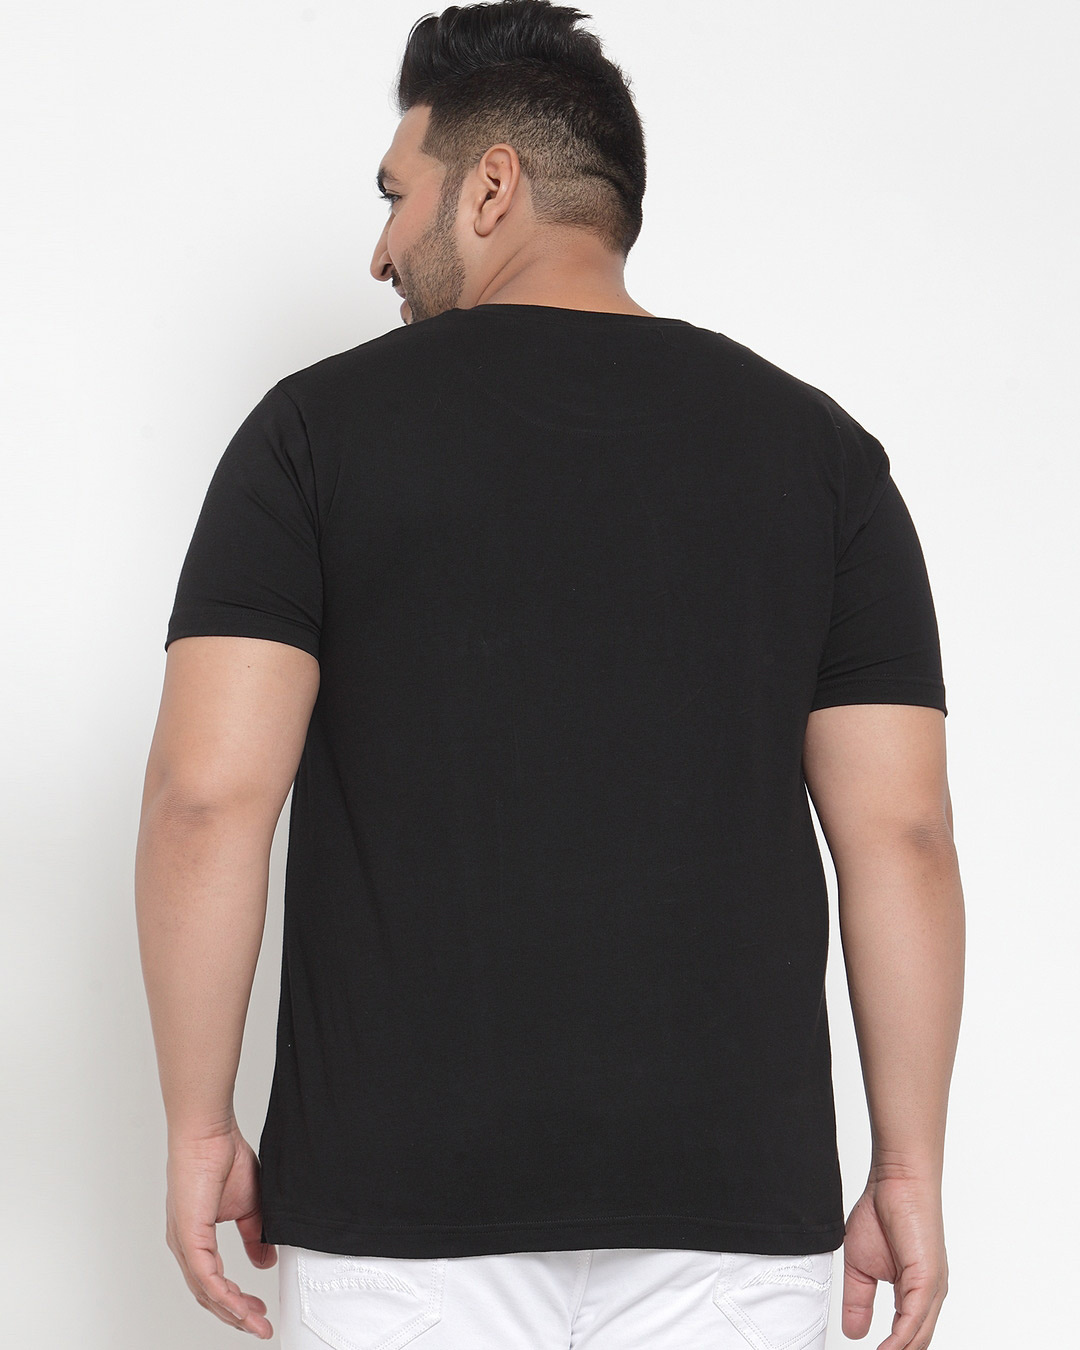 Shop PlusS Men T-Shirt Half Sleeves-Back